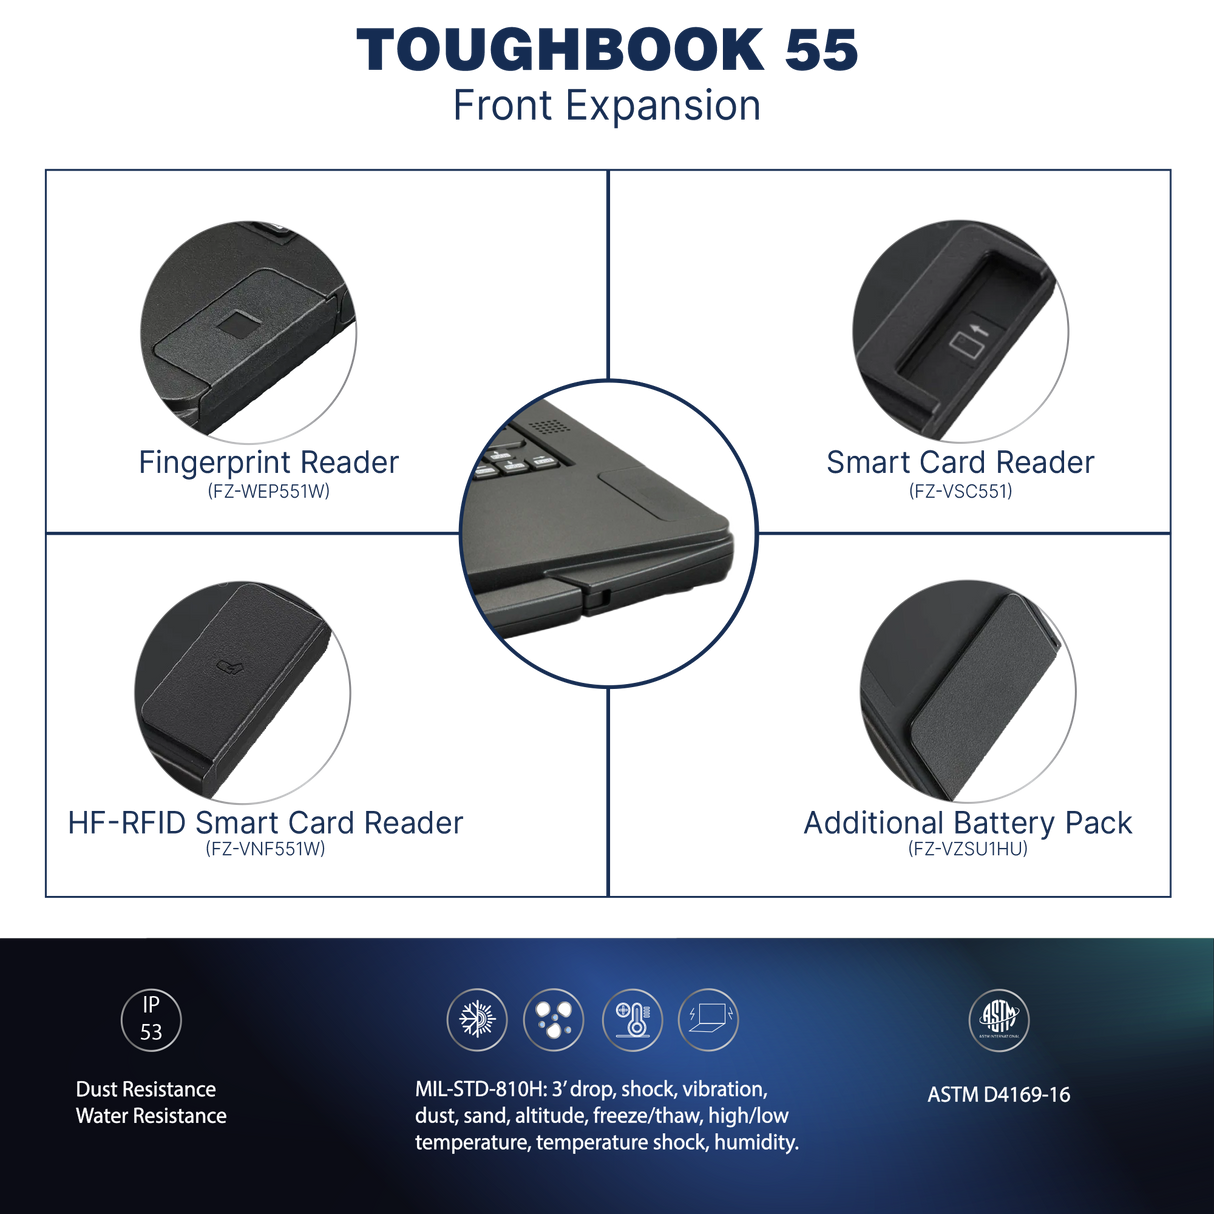 Toughbook 55, FZ-55 MK2, 14" FHD, Touchscreen, Intel i7, No USB-C, Windows 10 Pro (Configurable)